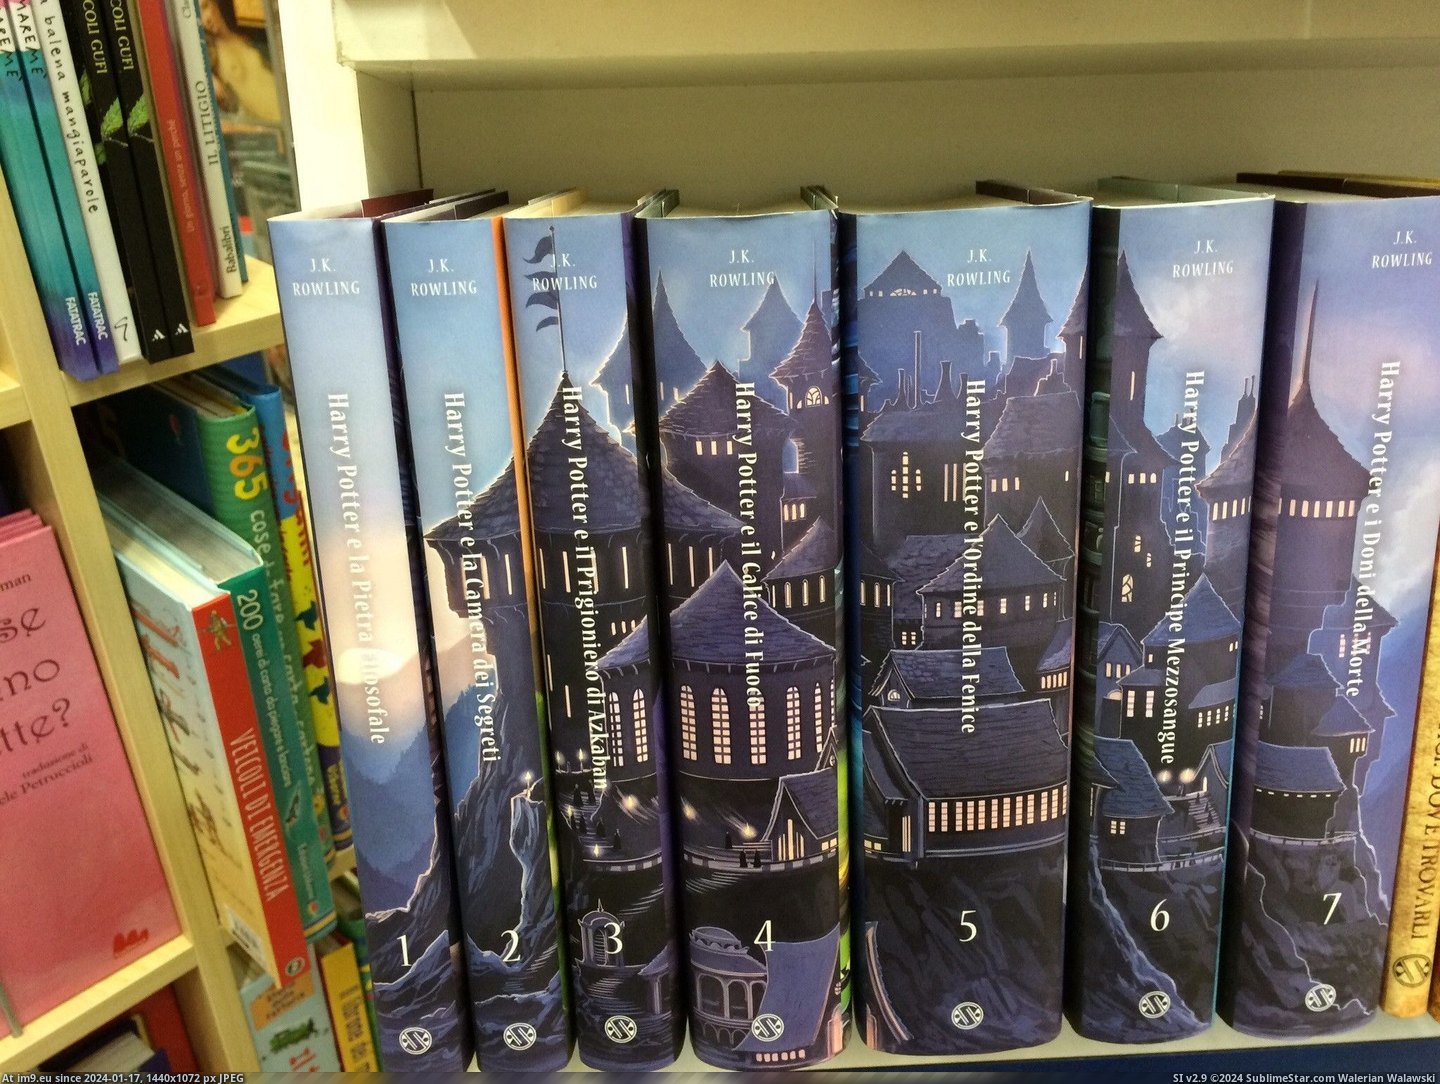 #Series #Edition #Italian #Books #Aligned #Forms #Castle #Harry #Potter [Mildlyinteresting] This Italian edition of the Harry Potter series forms a castle when the books are aligned Pic. (Image of album My r/MILDLYINTERESTING favs))